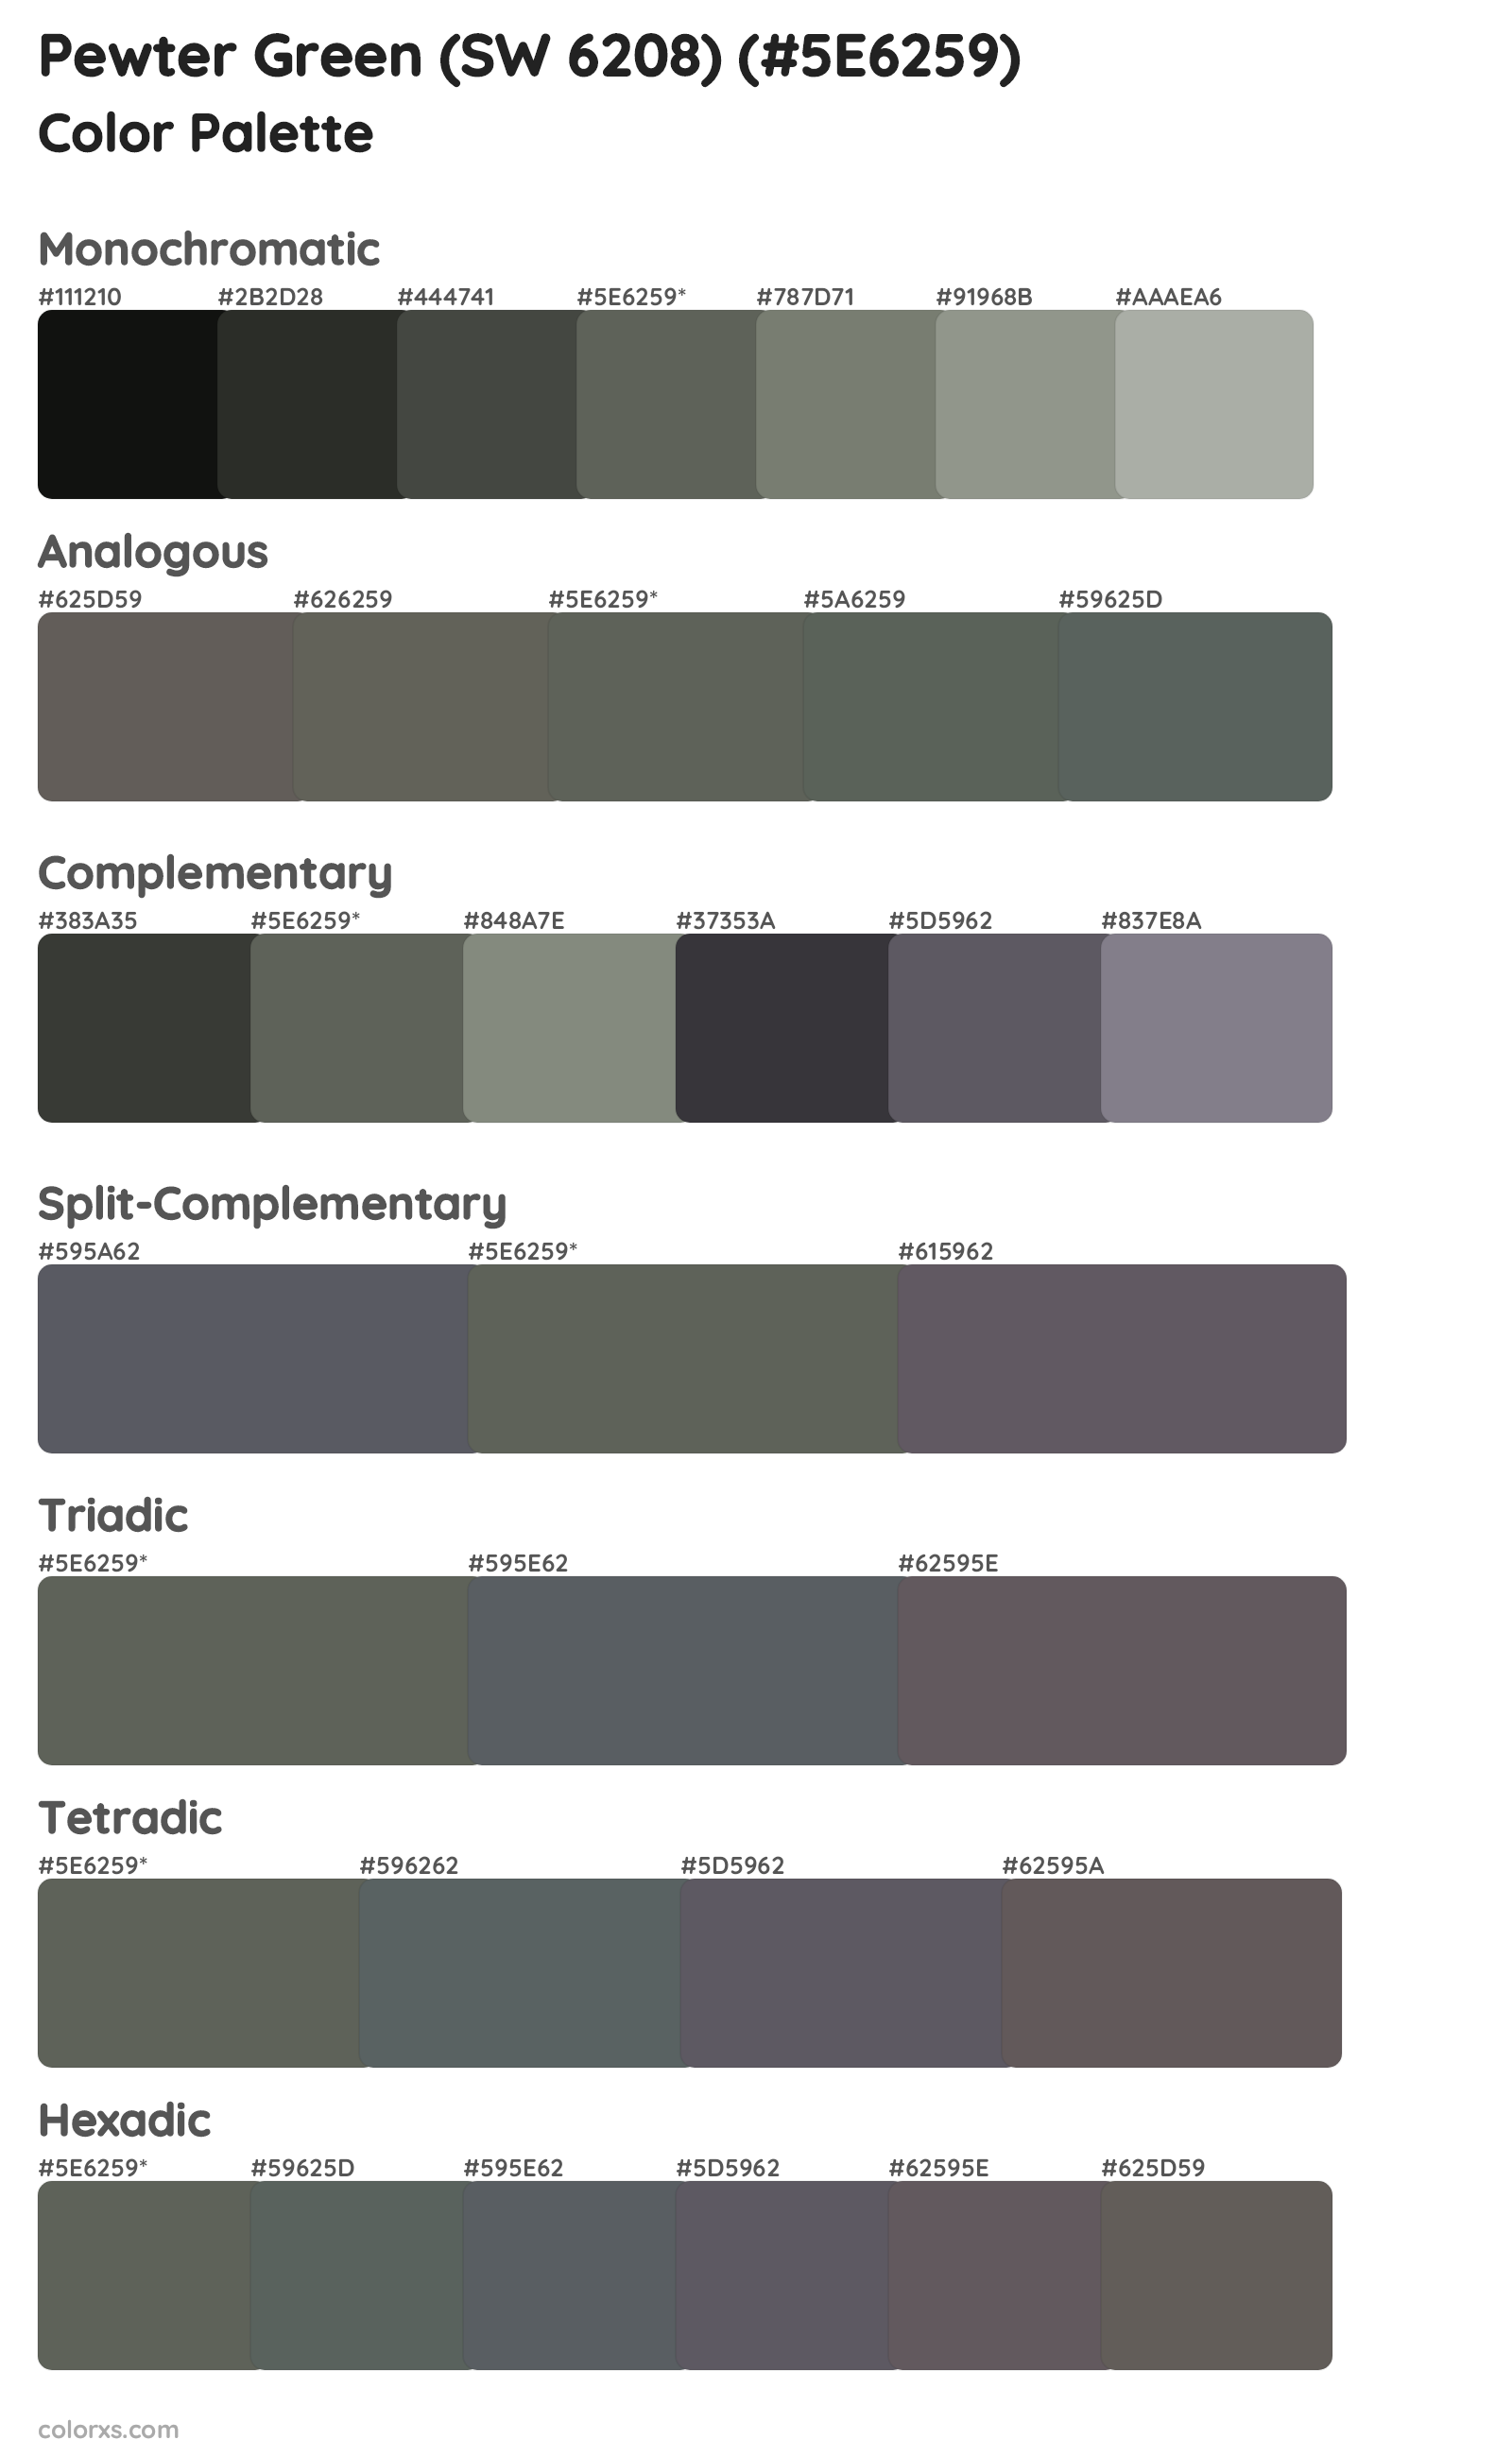 Pewter Green (SW 6208) Color Scheme Palettes